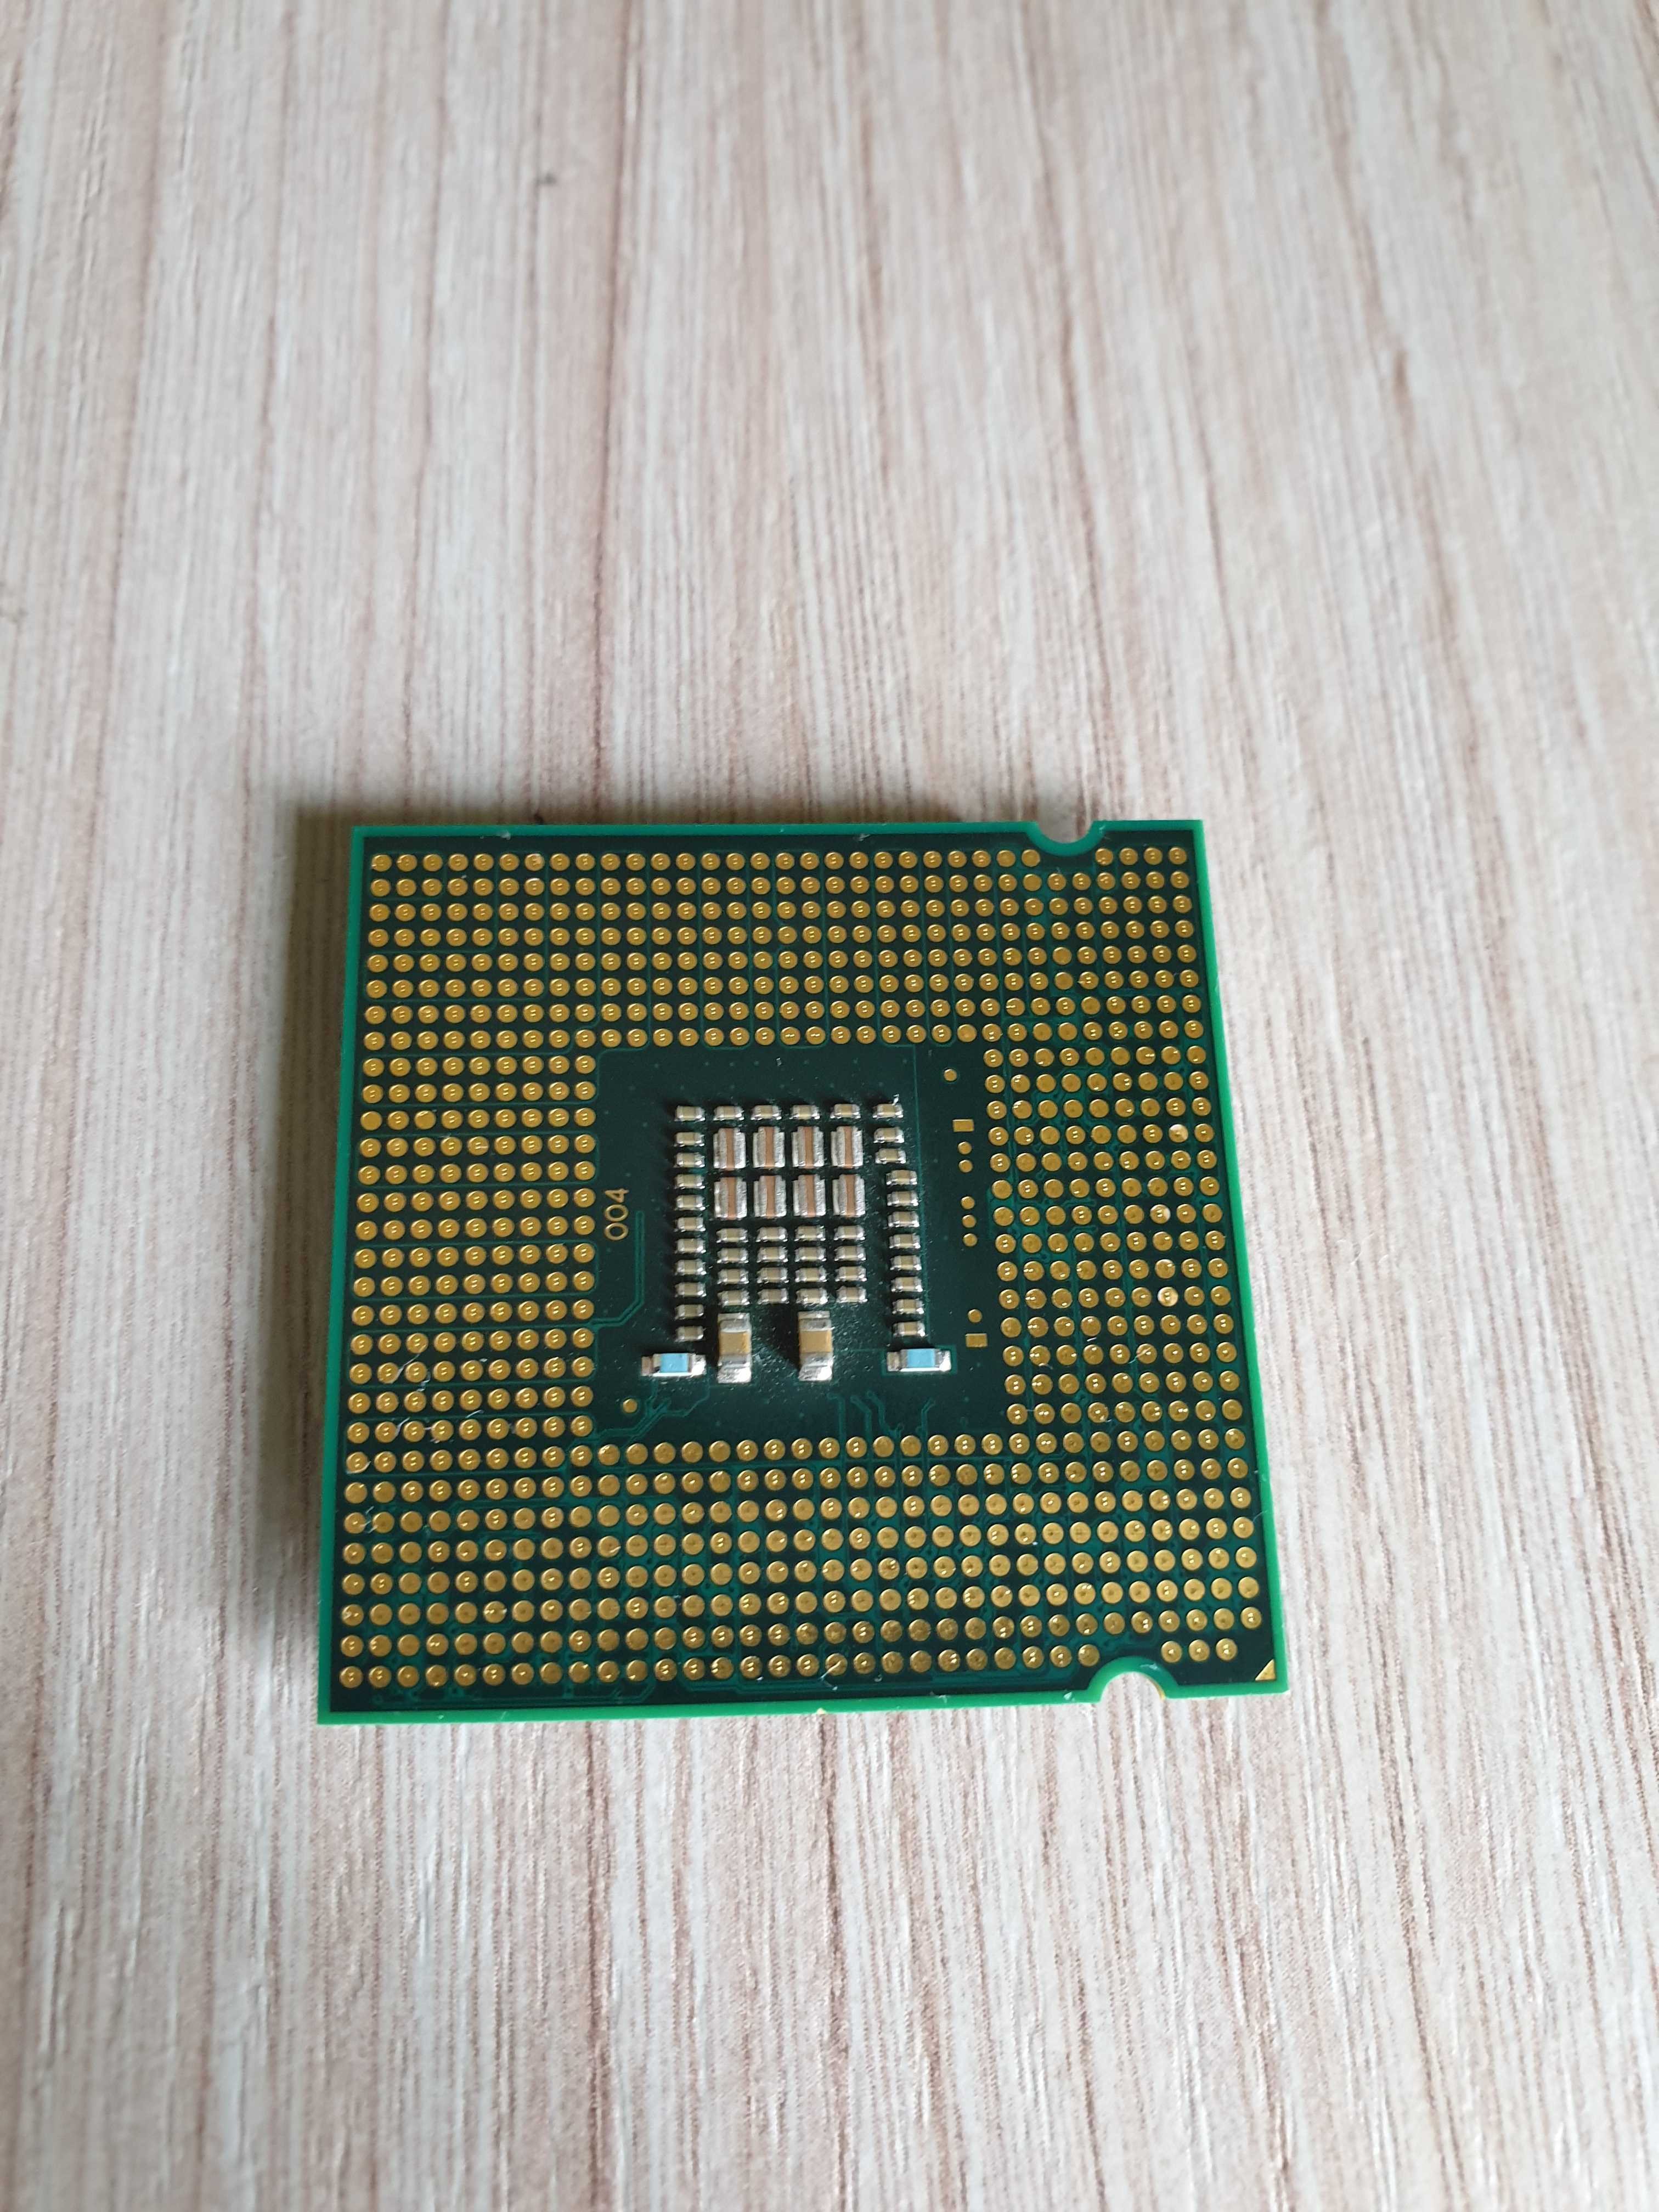 Procesor Intel Pentium Dual-Core E5400 2.70 GHz